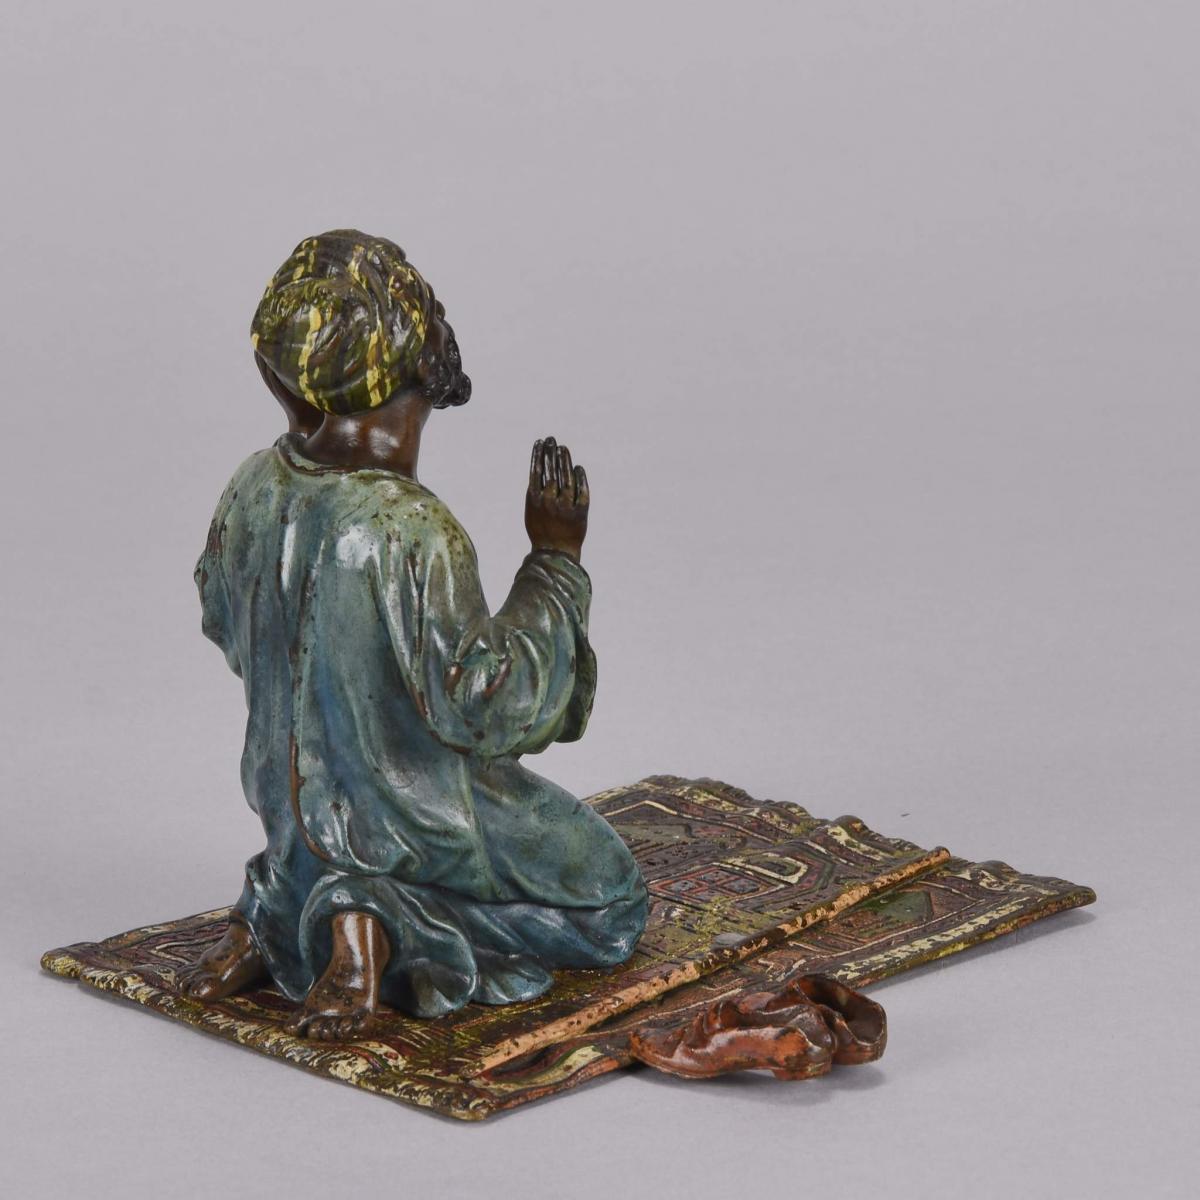 ‘Man at Prayer’ Cold Painted Vienna bronze by Franz Bergman